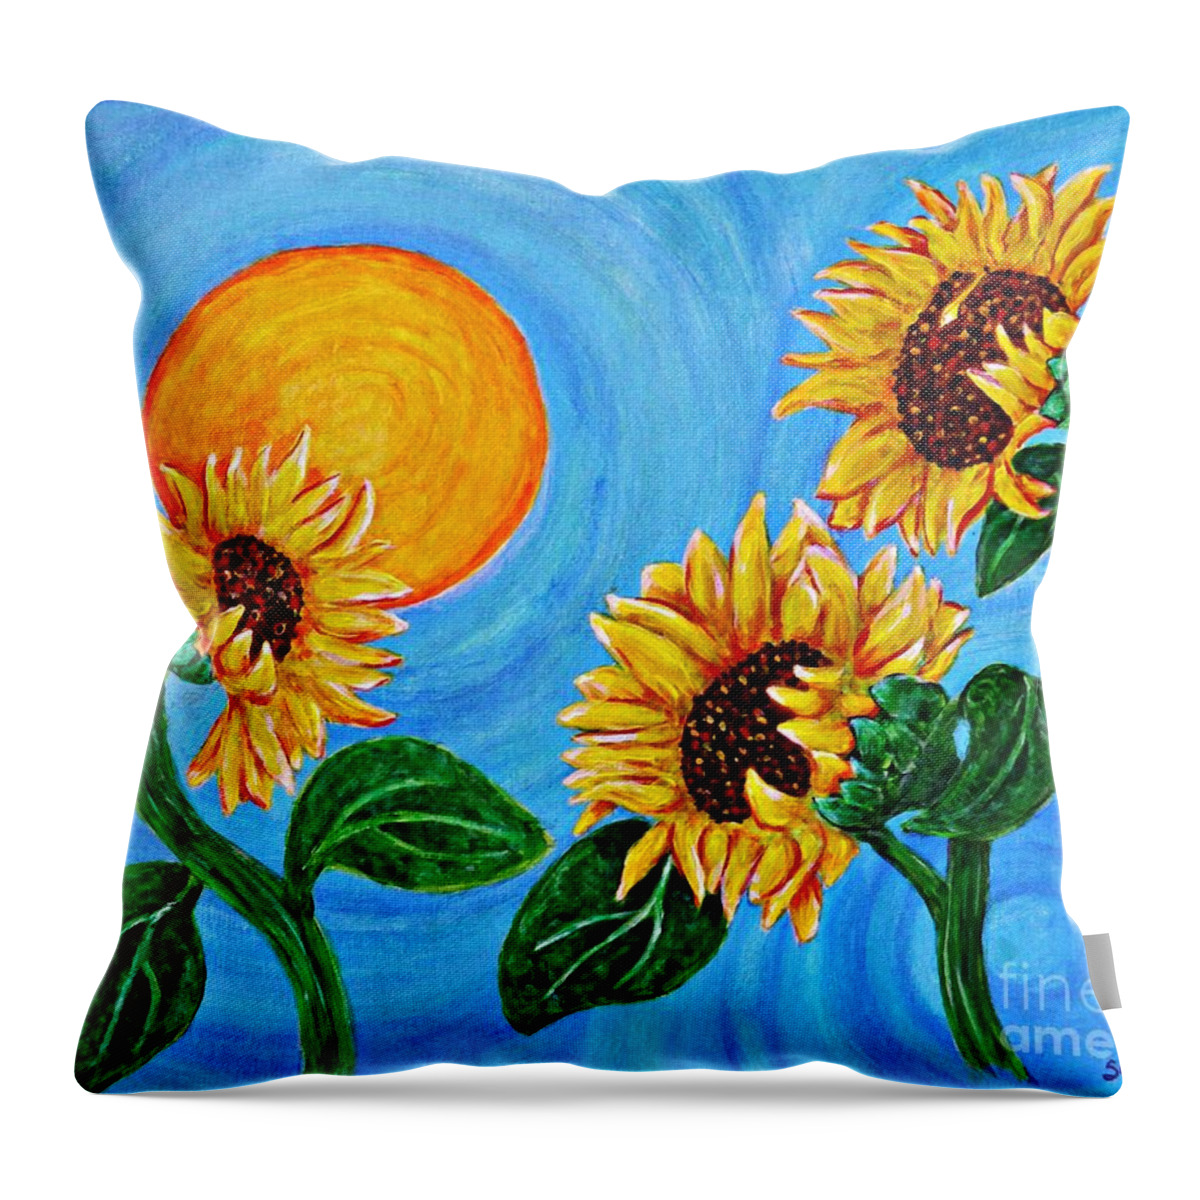 Sunflower Throw Pillow featuring the painting Sun Dance by Sarah Loft